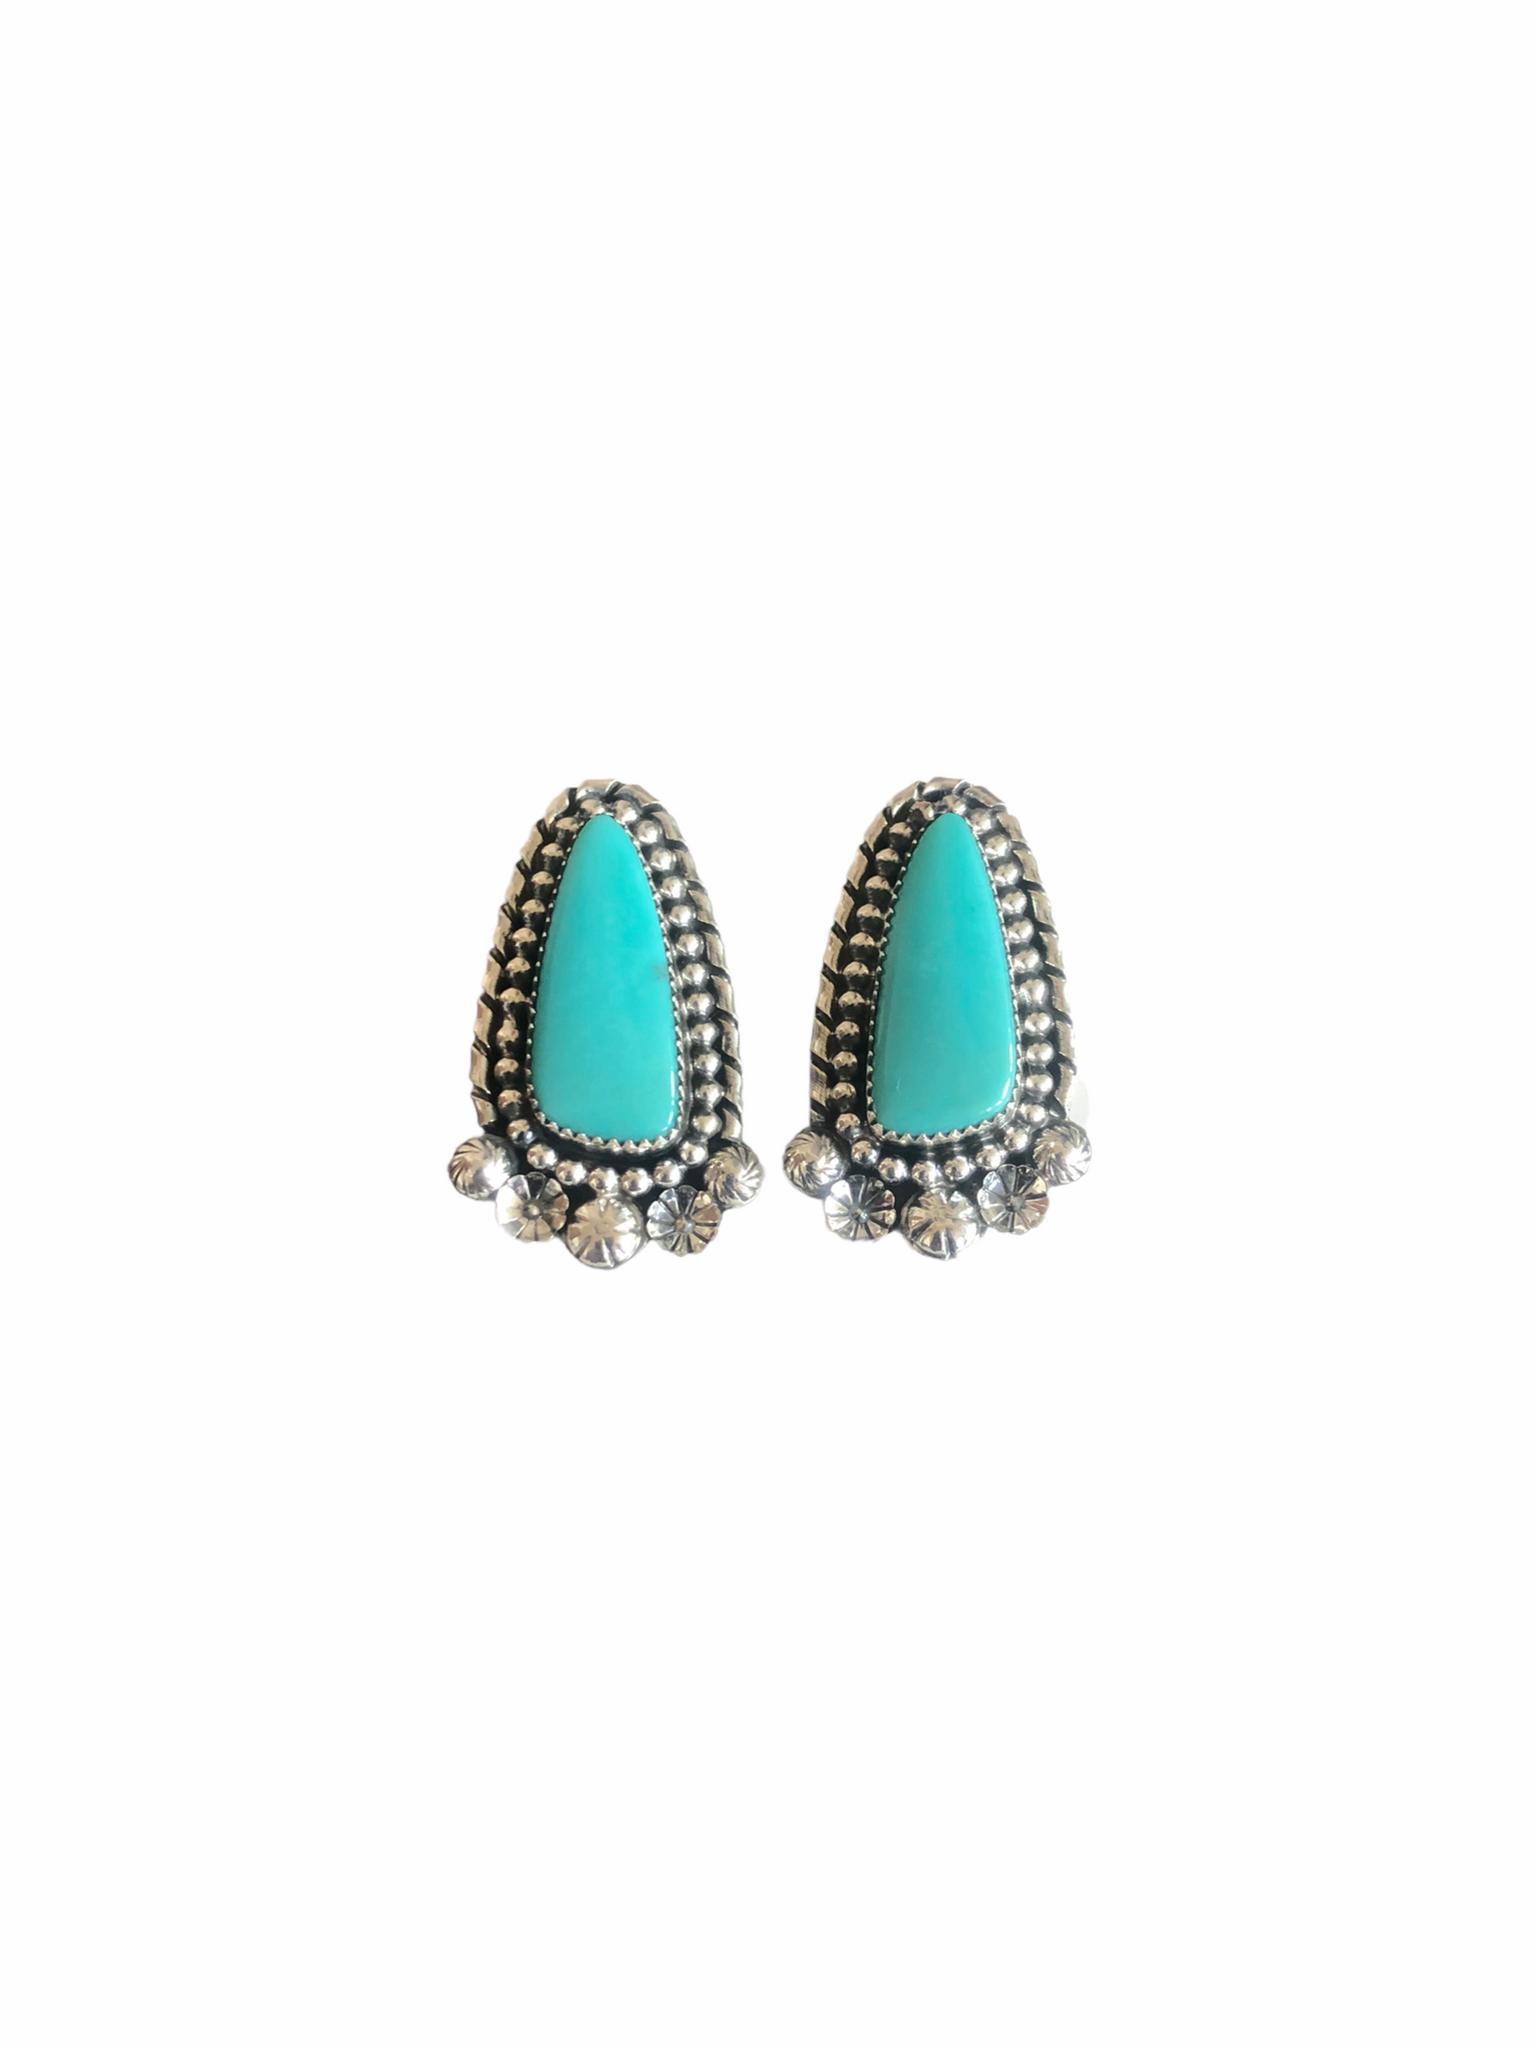 Stunning Sonoran Turquoise Earrings